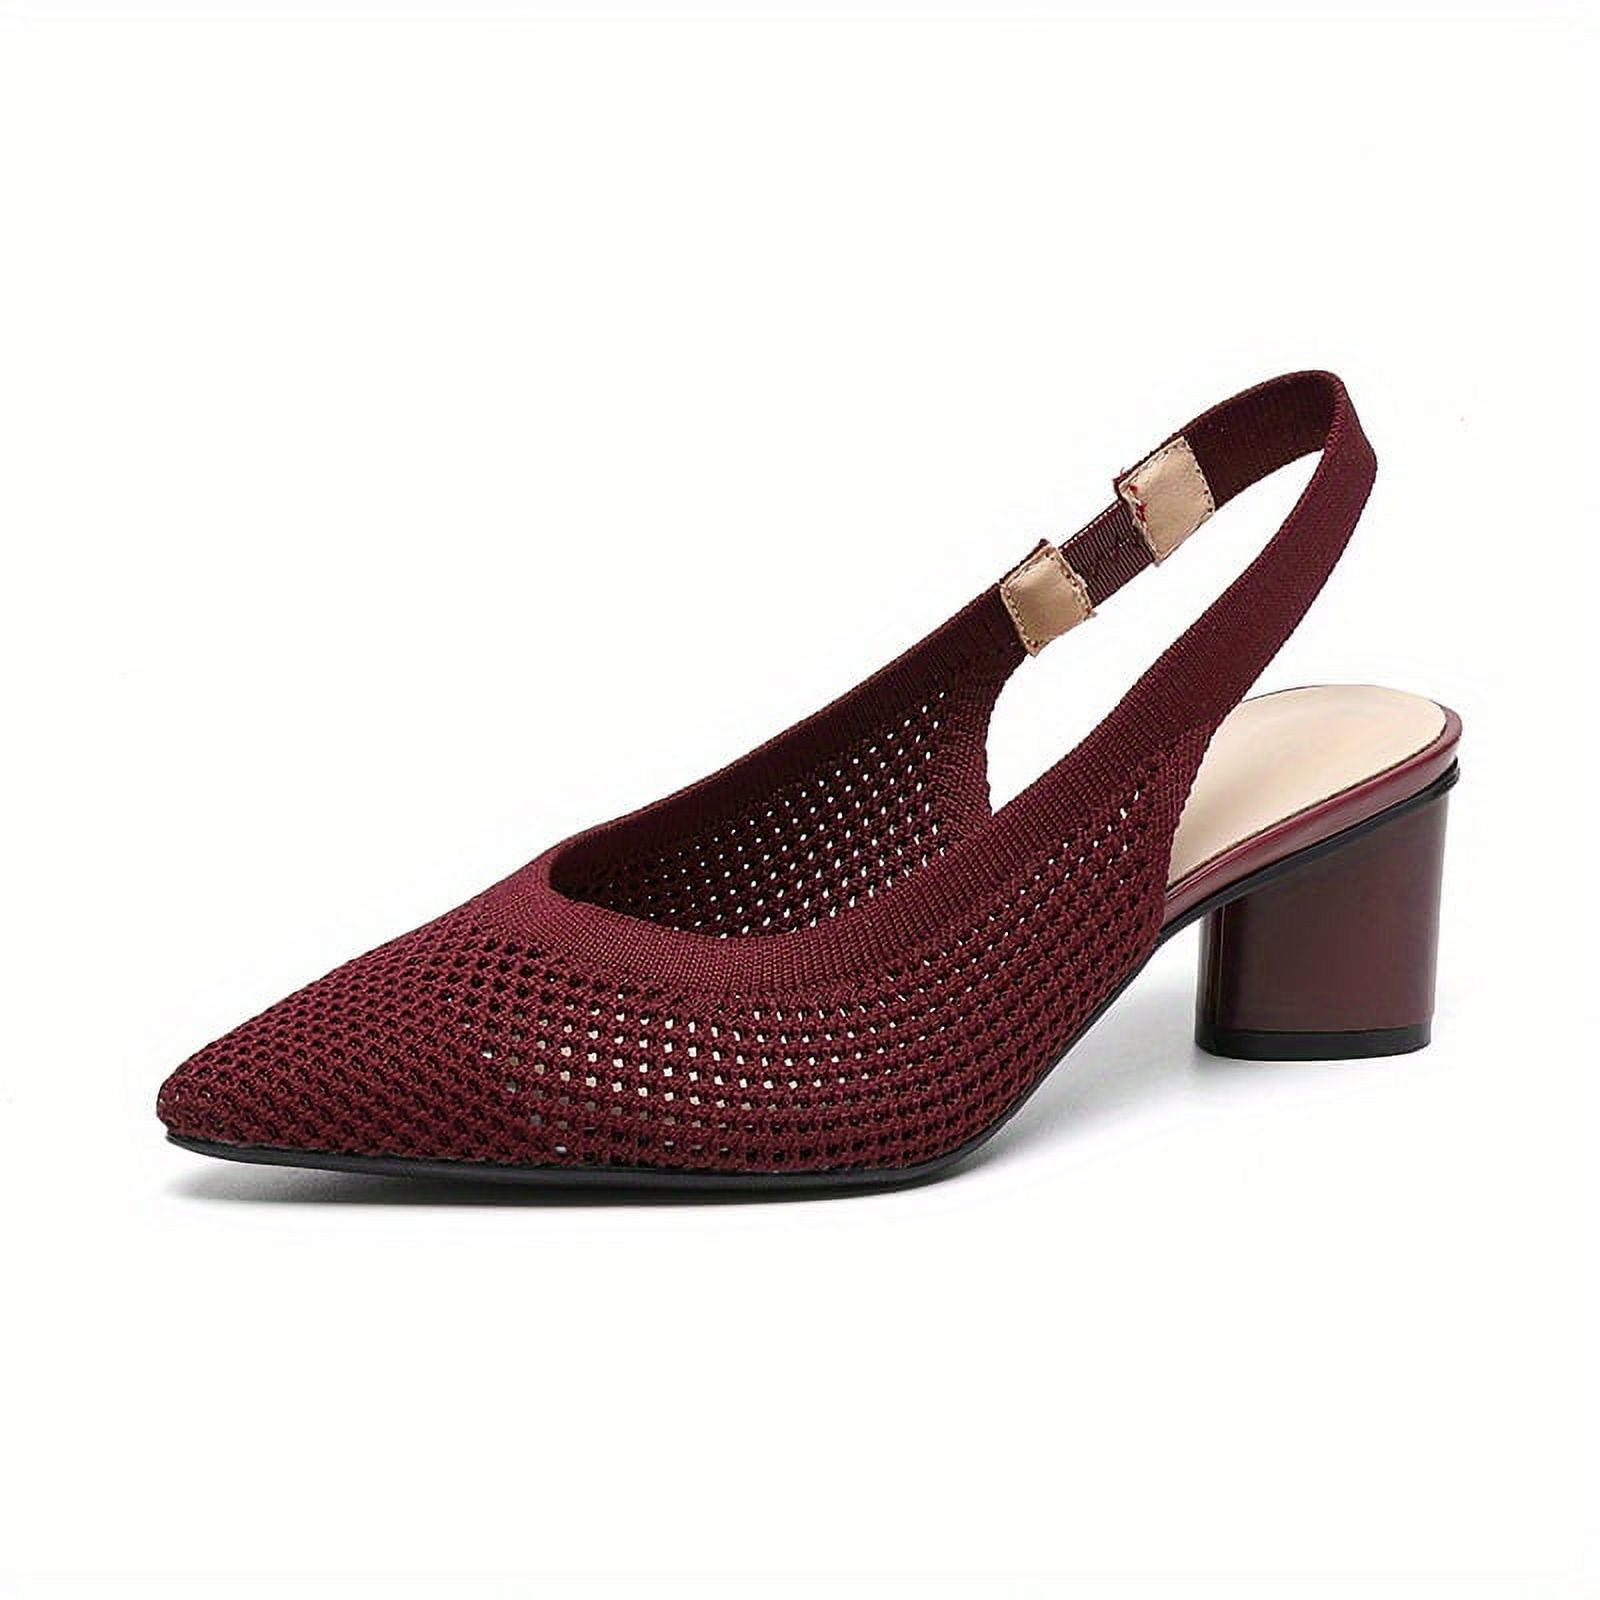 Elegant Women's High Block Heel Sandals - Chic Pointed Toe, Secure ...